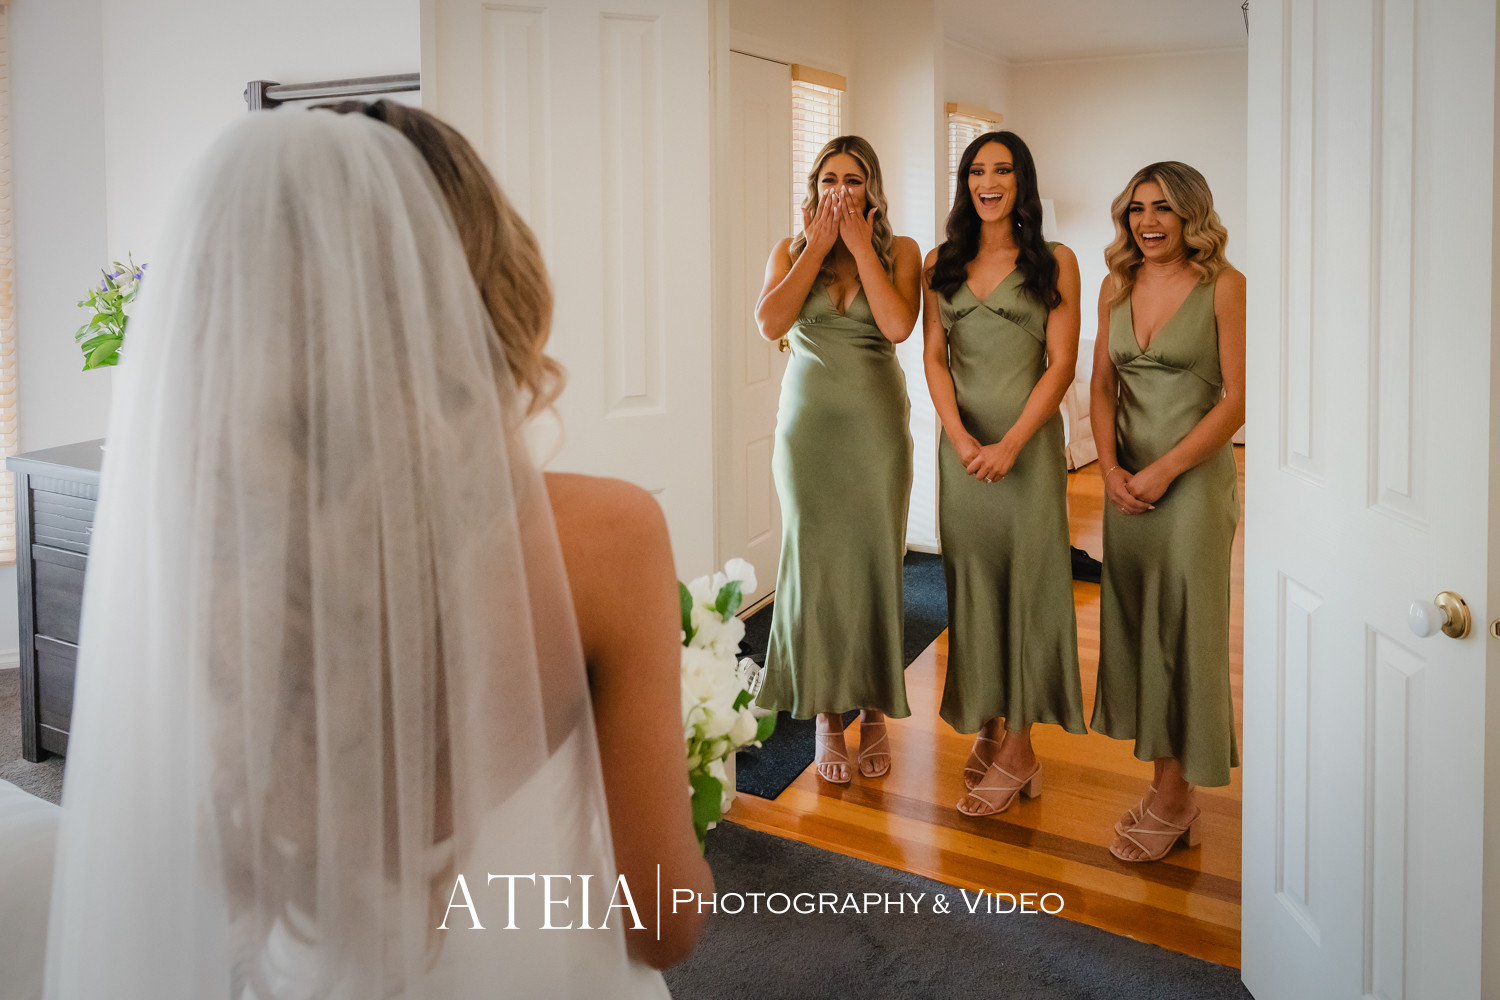 , Sarah and James&#8217; wedding photography at Ballara Receptions Eltham captured by ATEIA Photography &#038; Video